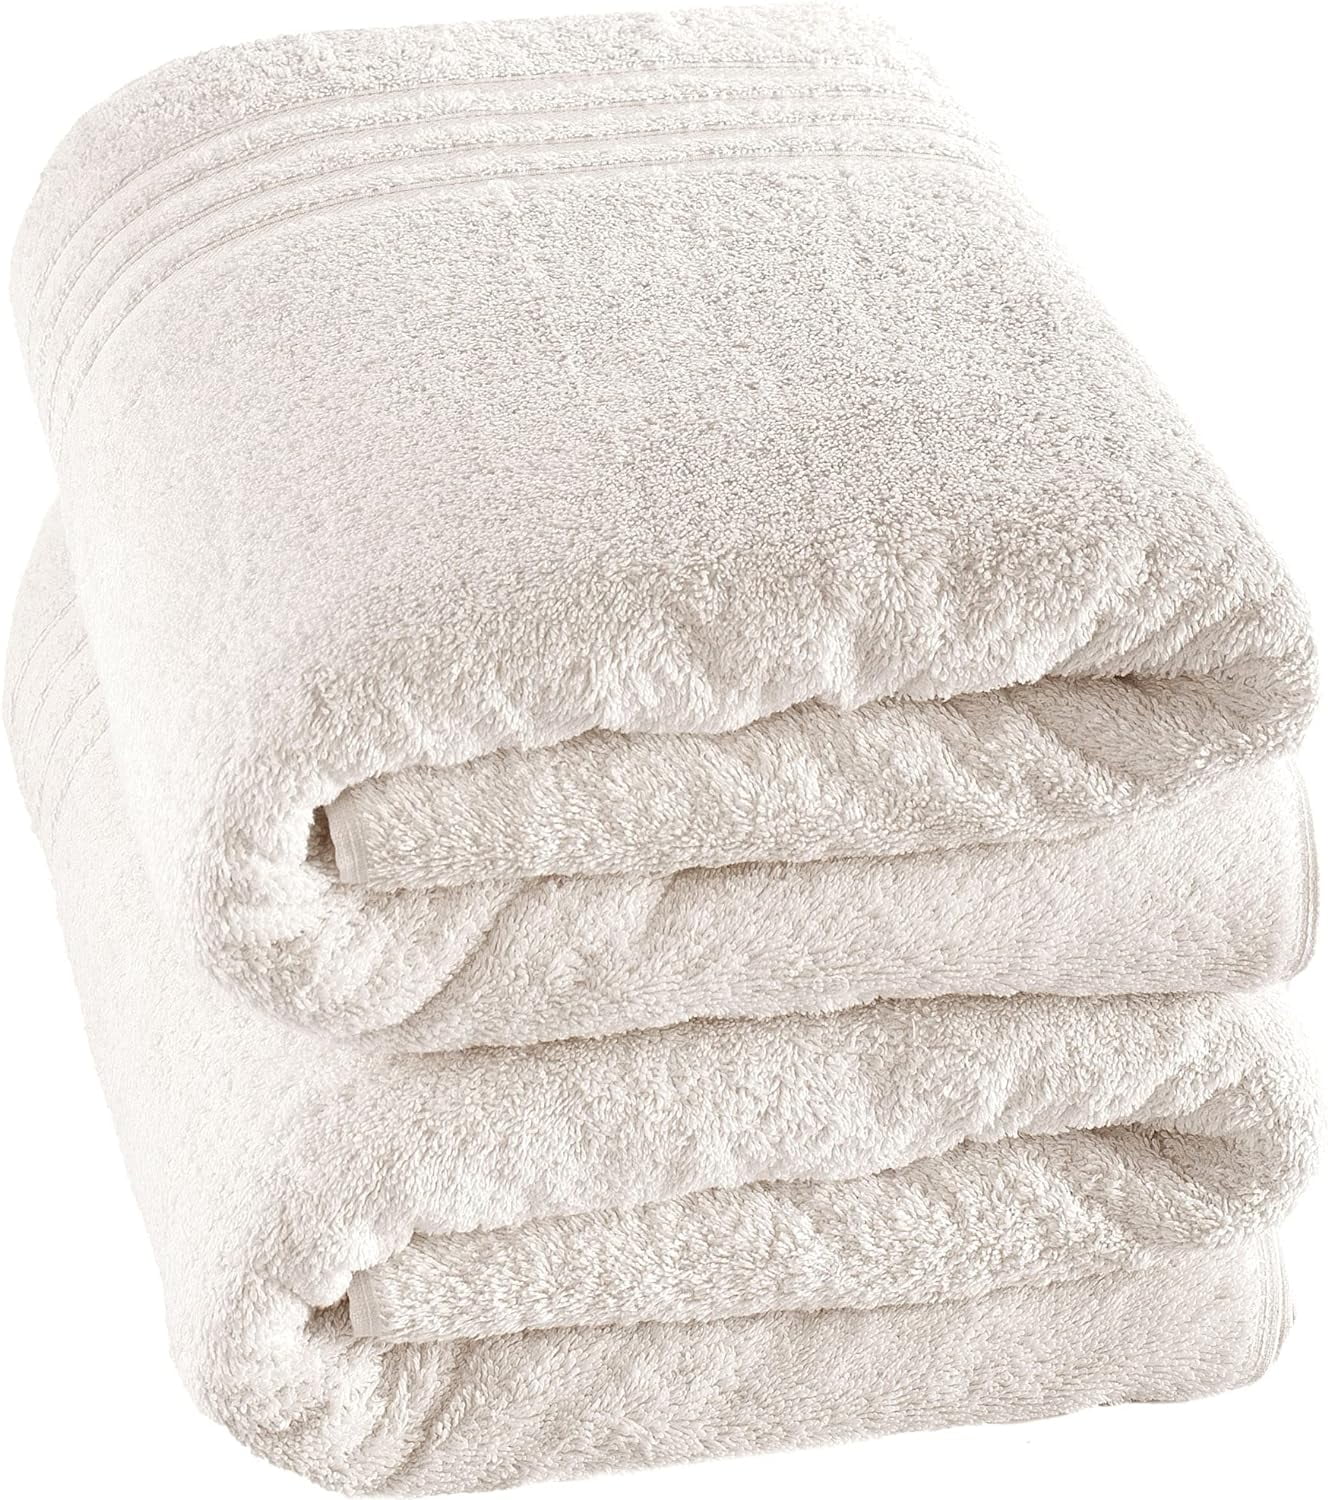 American Soft Linen Turkish Cotton, Large Jumbo Bath Towel 35x70 Premium & Luxury Towels for Bathroom, Maximum Softness & Absorbent Bath Sheet